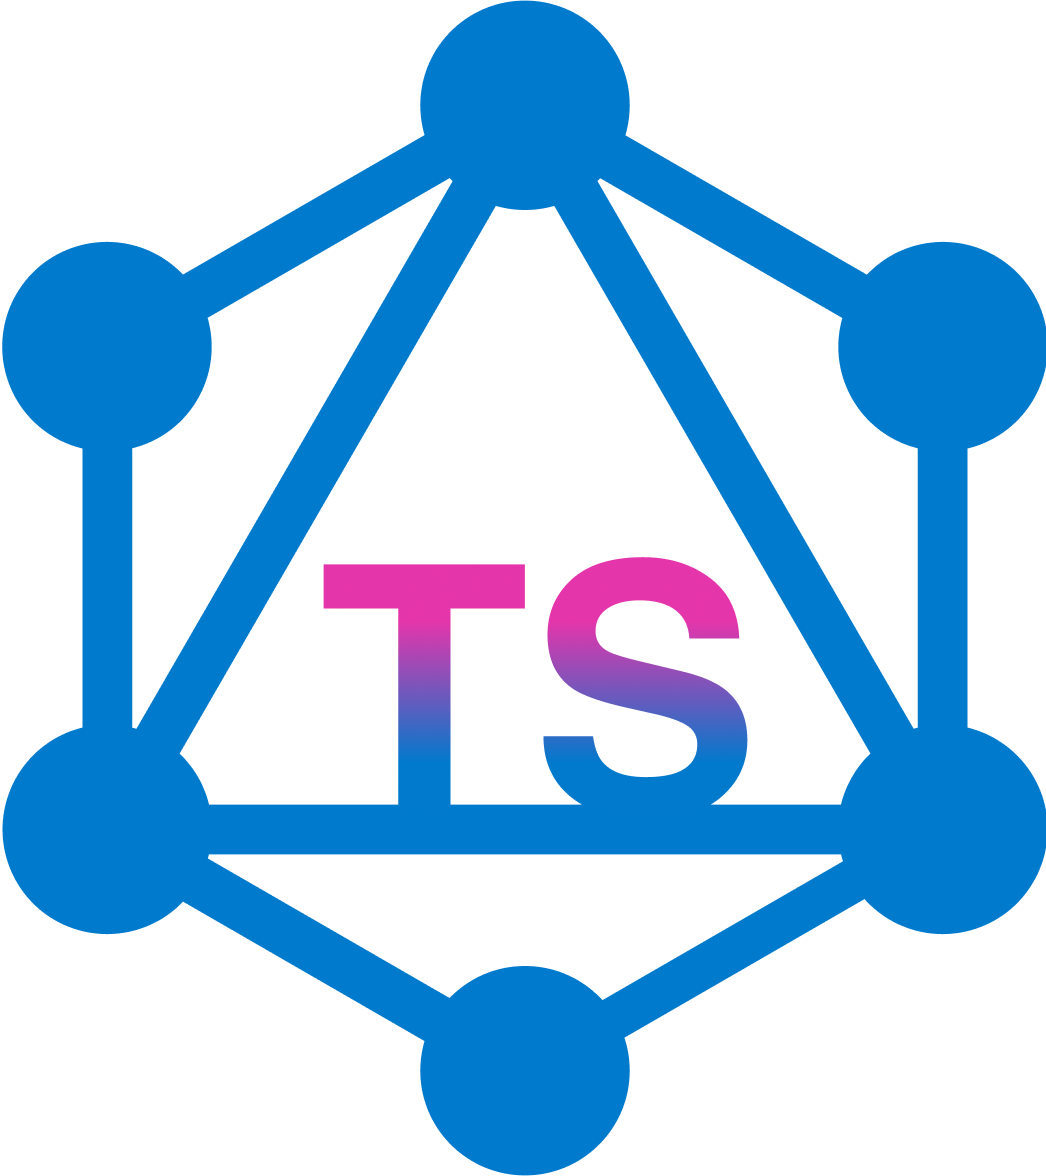 sgts logo